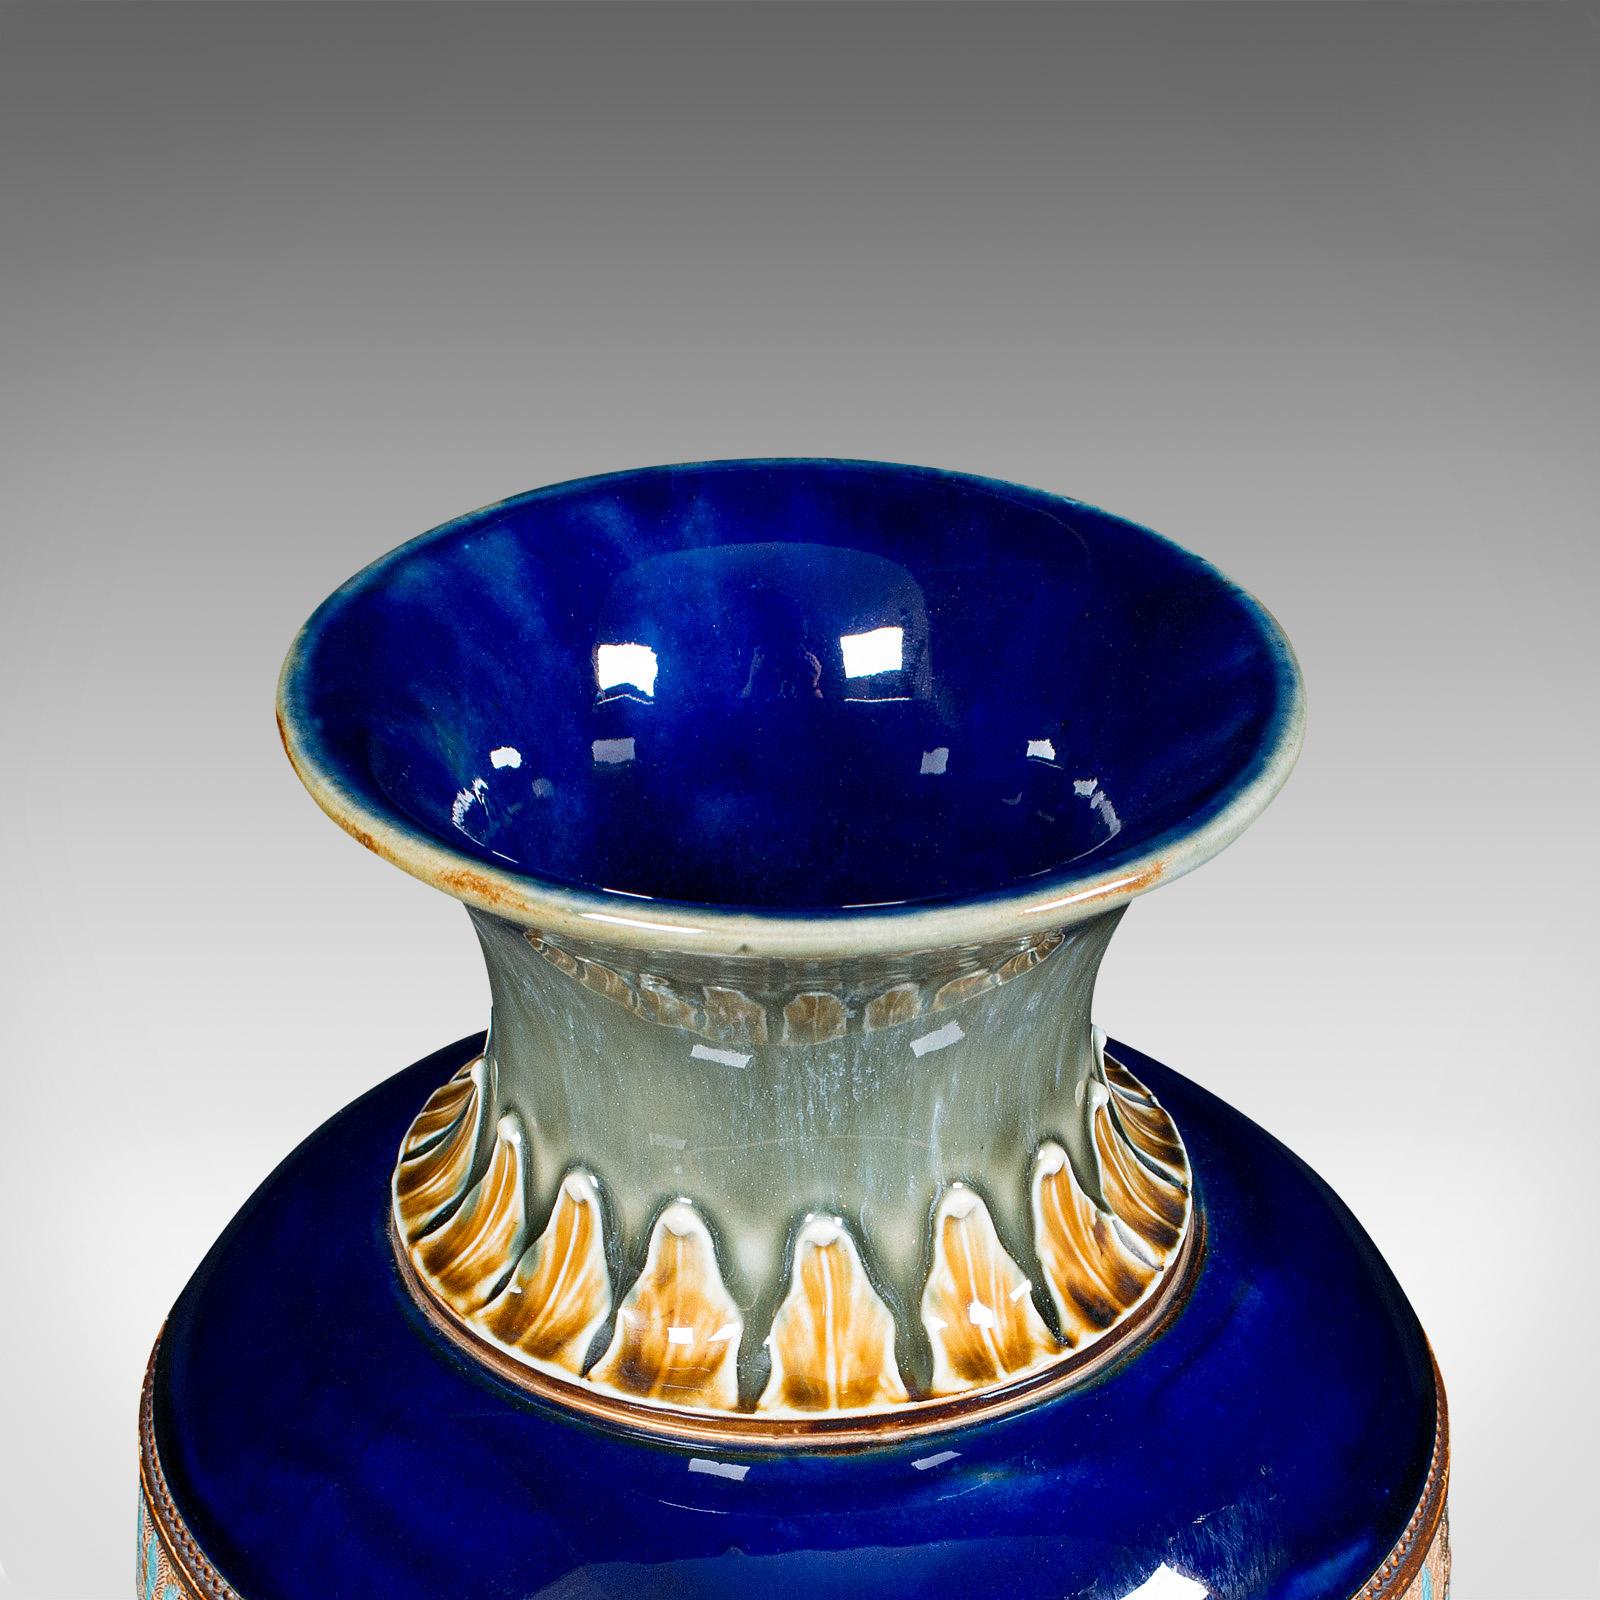 Antique Decorative Vase, English, Ceramic, Display, Art Nouveau, Edwardian, 1910 1